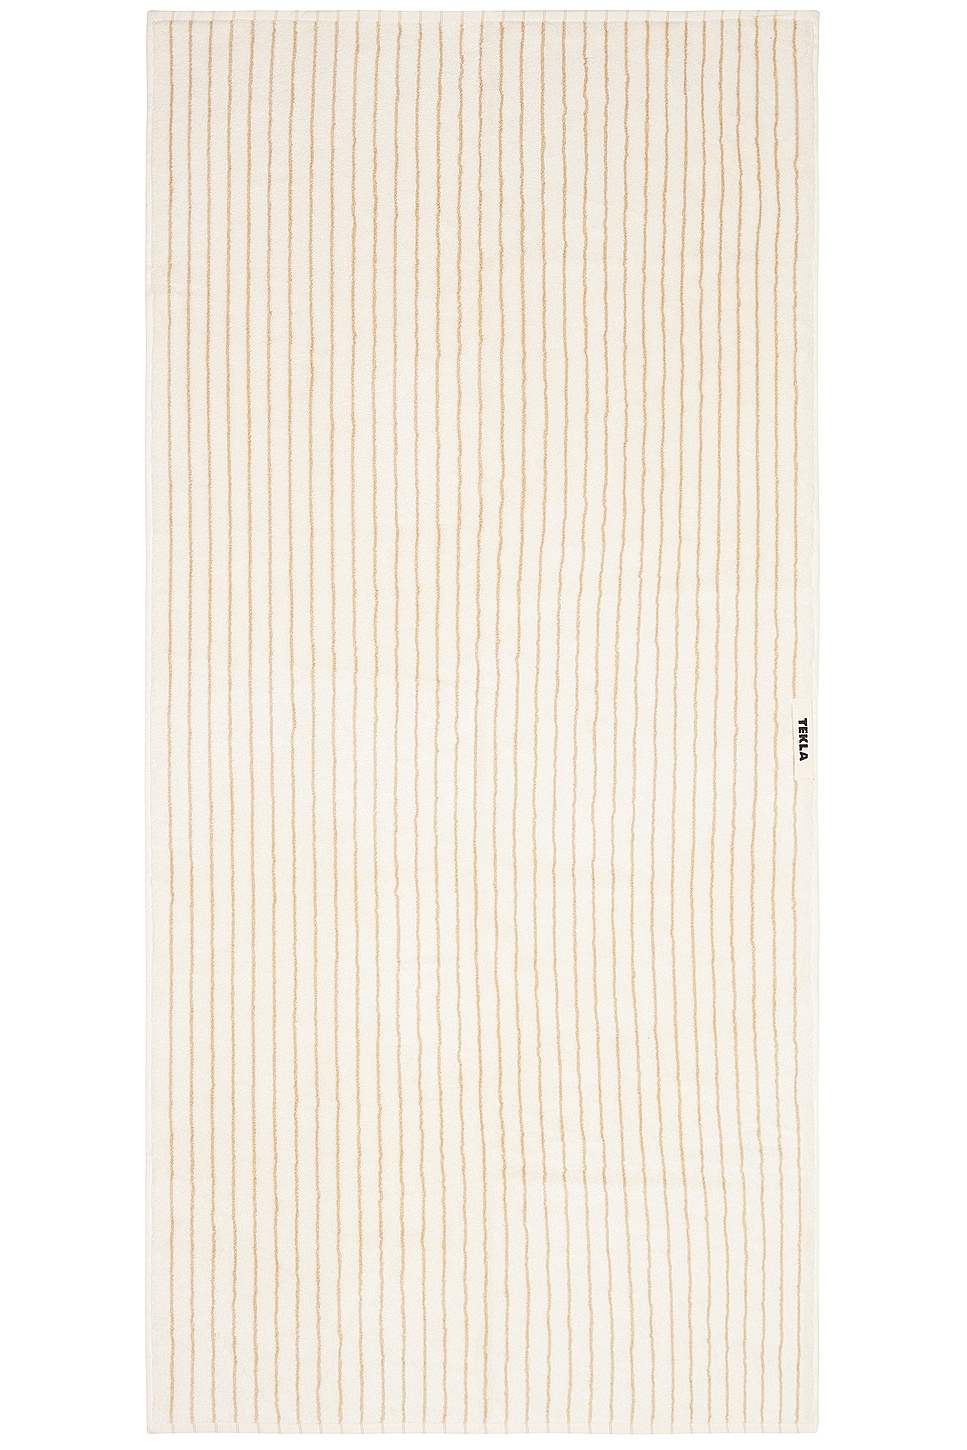 Image 1 of Tekla Bath Towel in Sienna Stripe